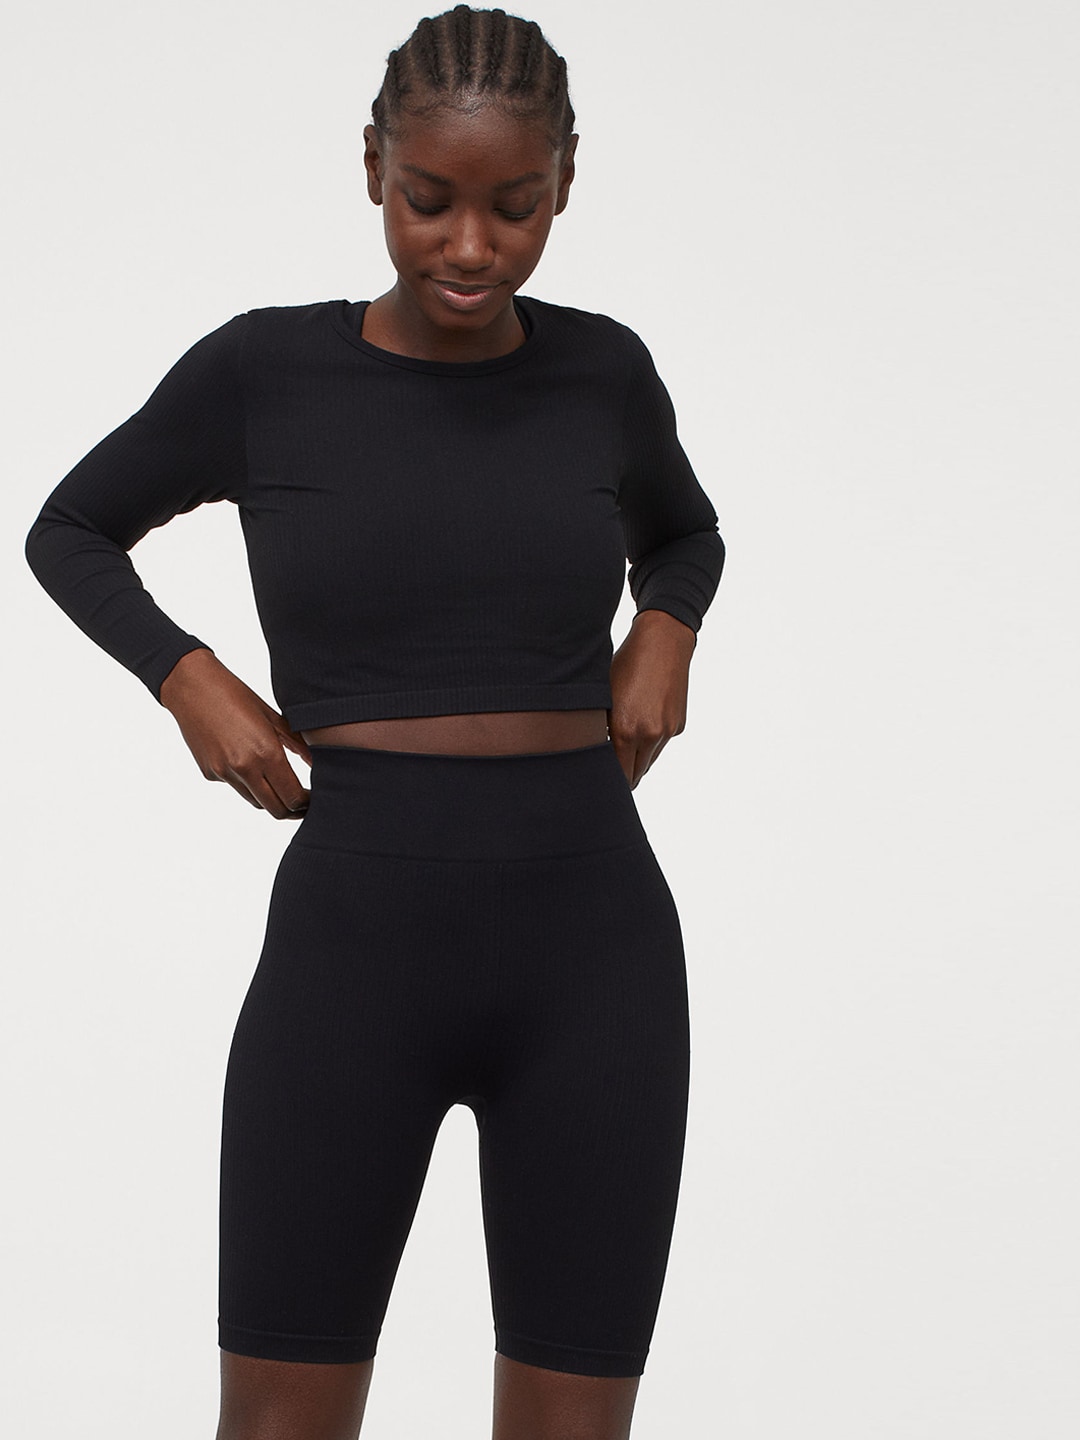 H&M Women Black Self Design Seamless Biker Shorts Price in India